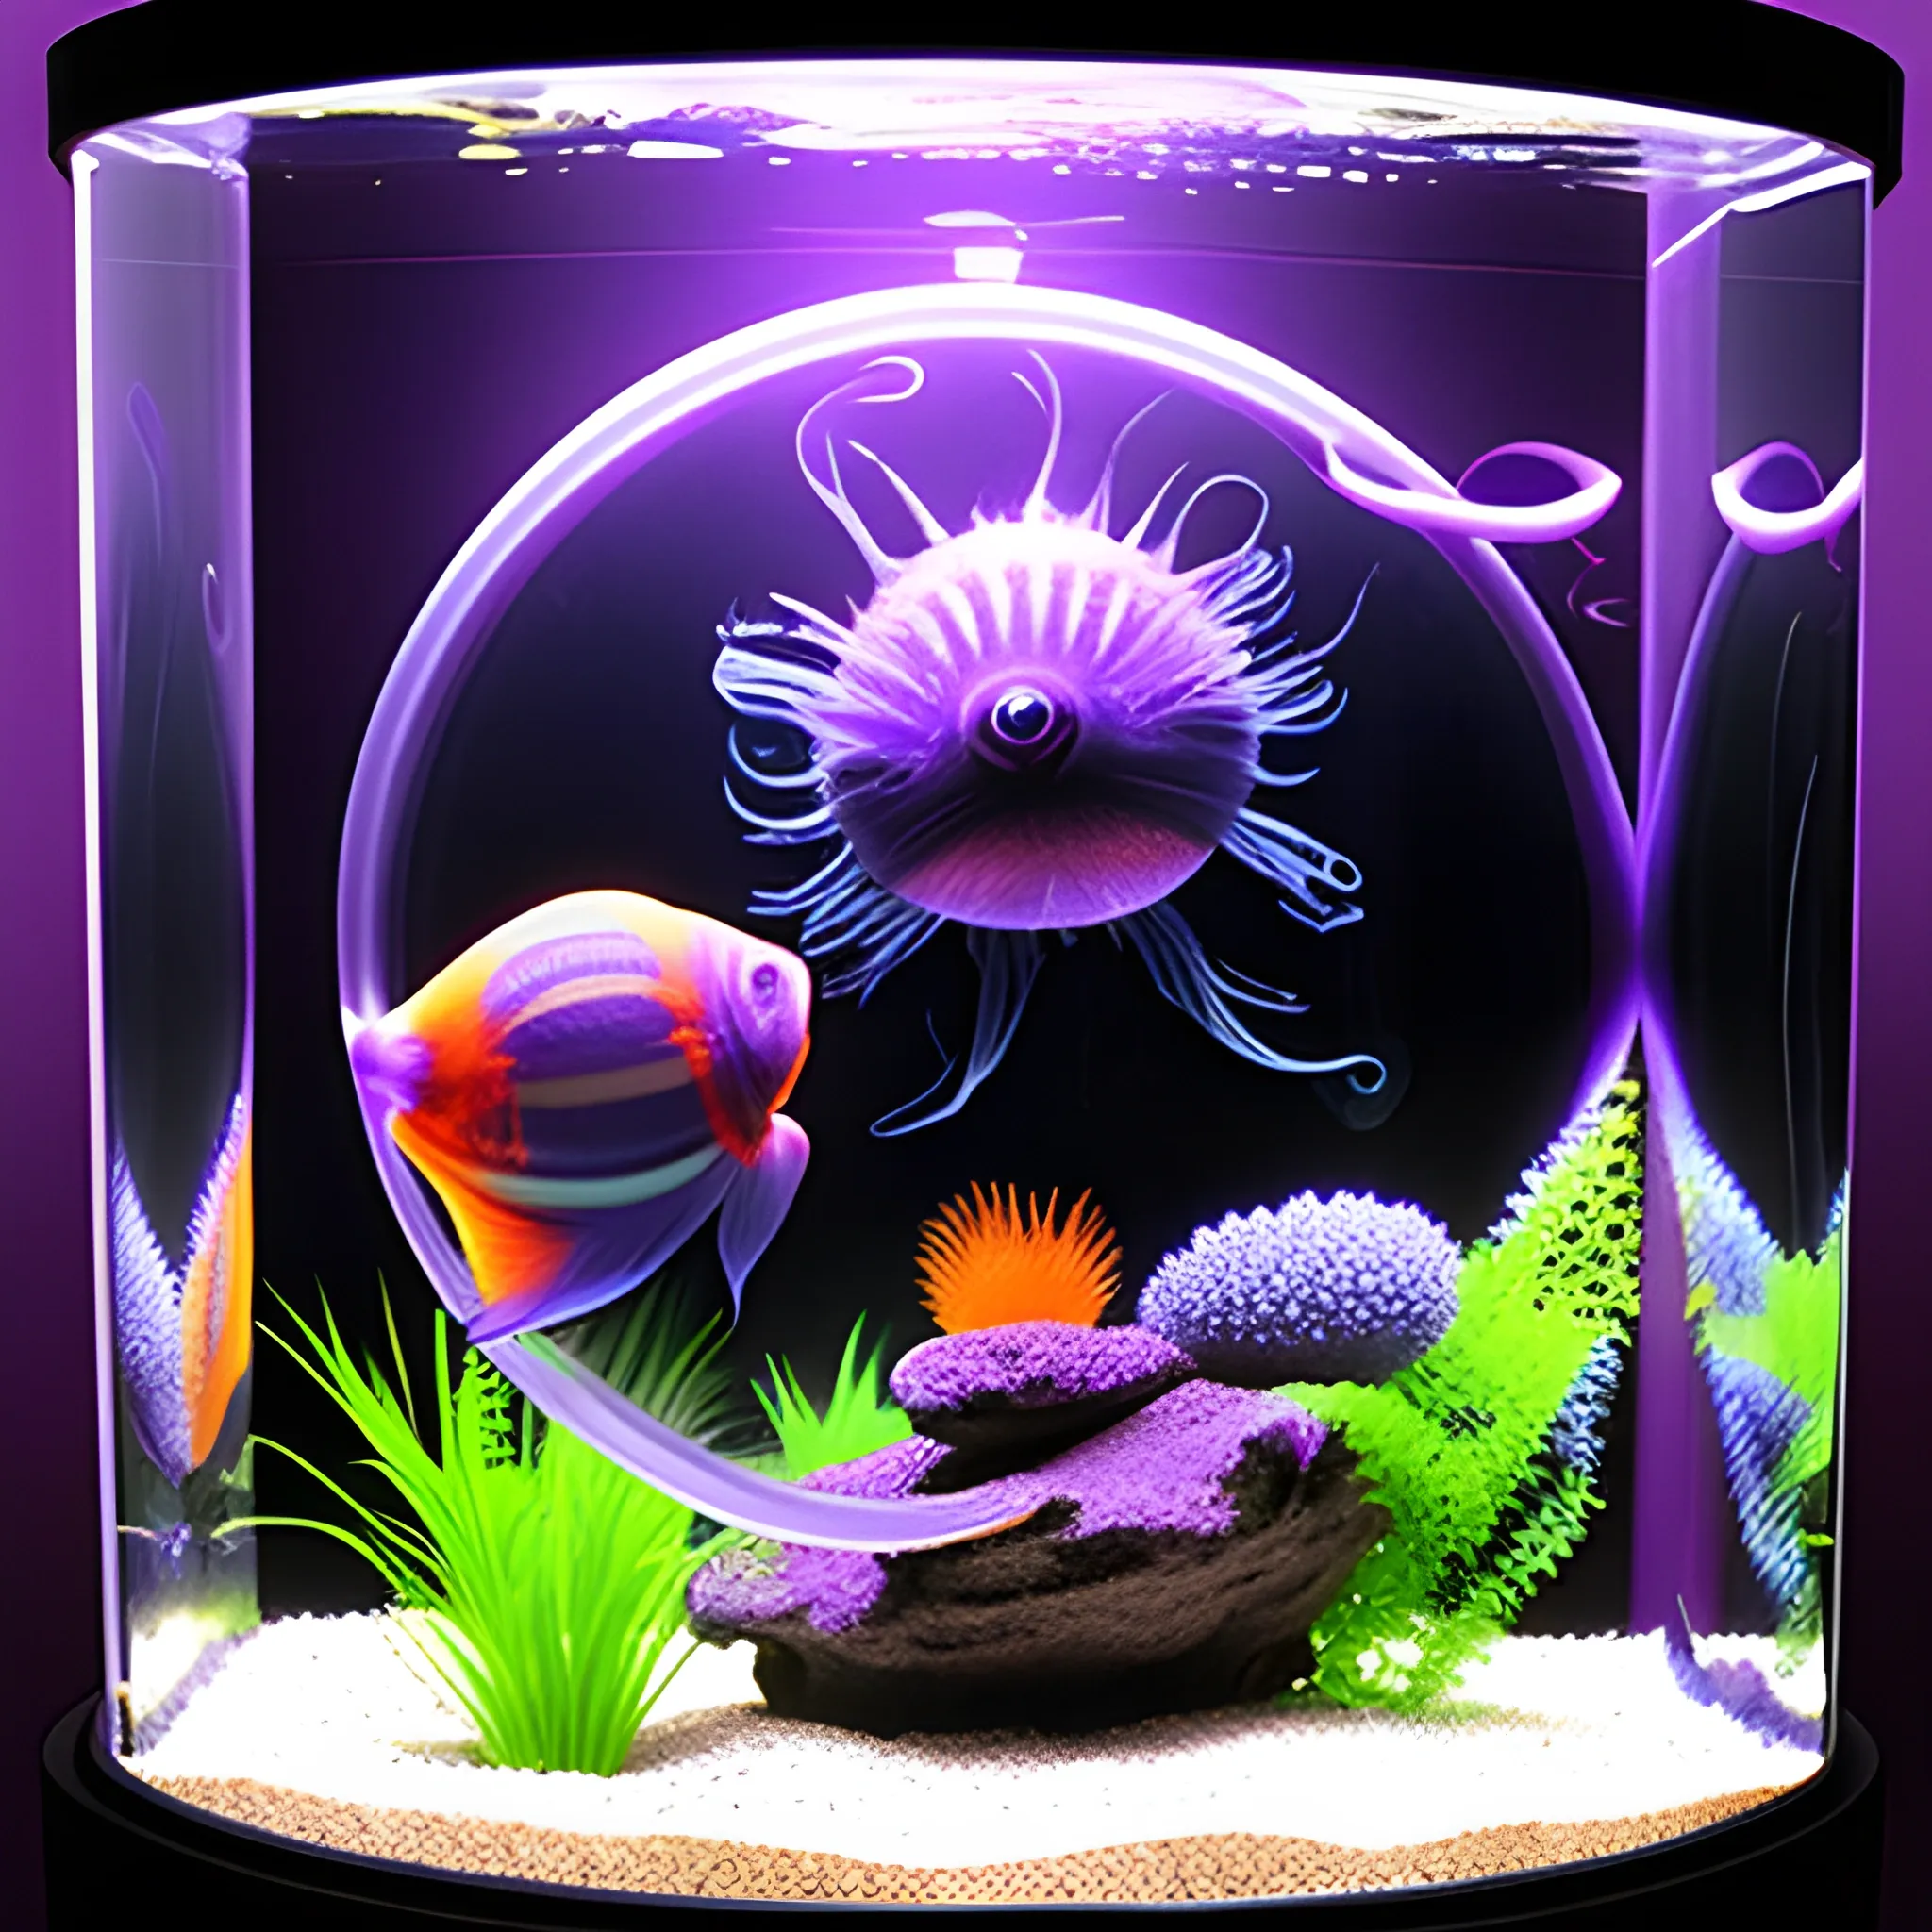 Psychedelic alien purple sphere aquarium. Real fish, surreal atm 